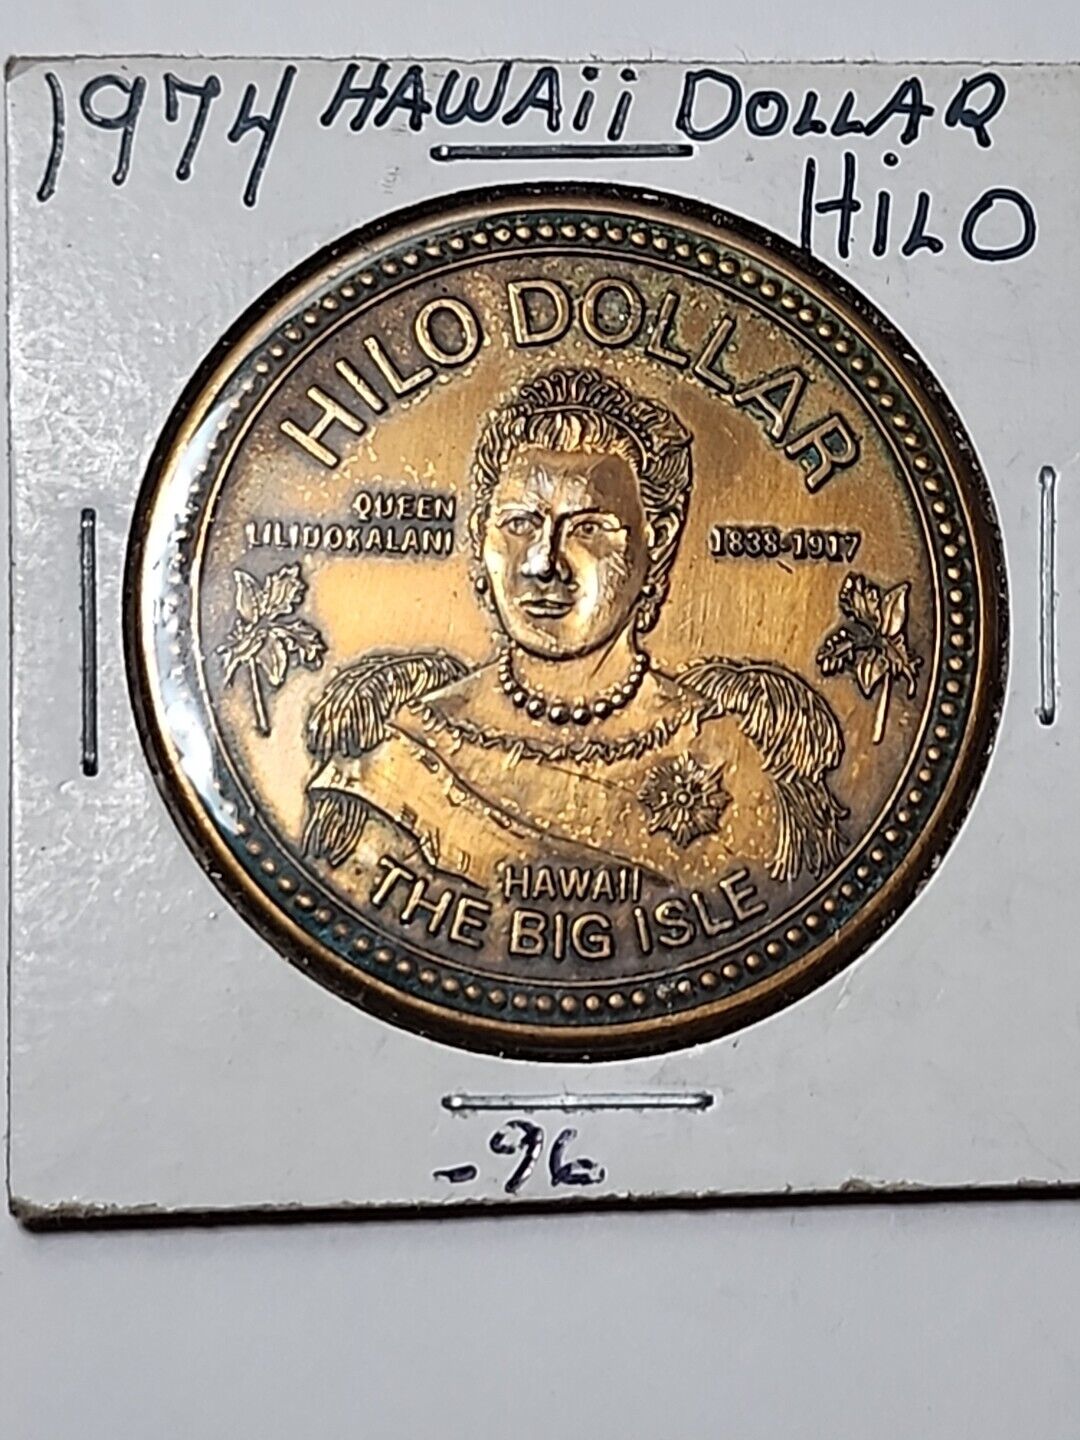 1974 Hilo Dollar Hawaii Liliuokalani Golden Chamber of Commerce $1 Token JBT 174